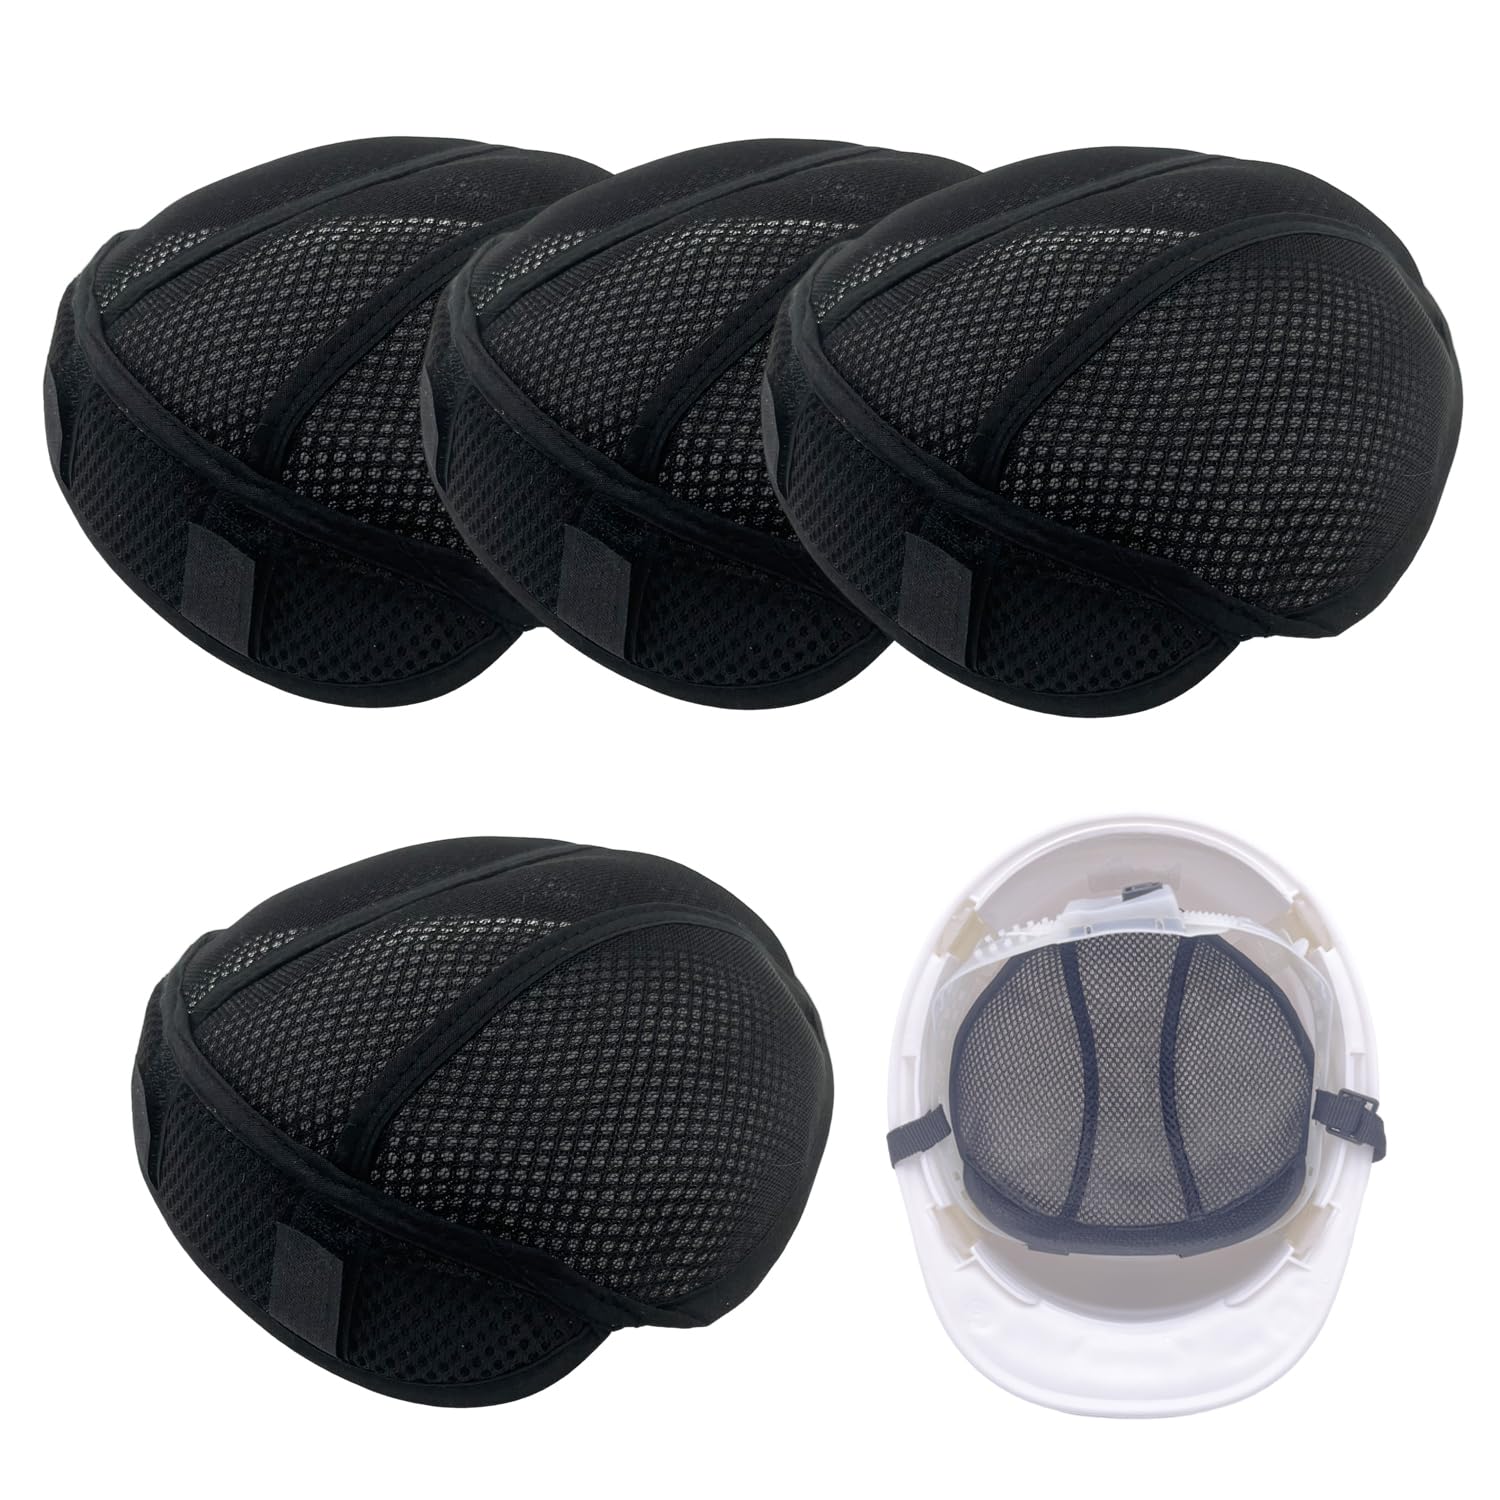 DKAEBLC ヘルメット インナー 汗止め メッシュ ヘルメット用 インナー 取付用 通気 熱中症対策 作業用 4枚セット